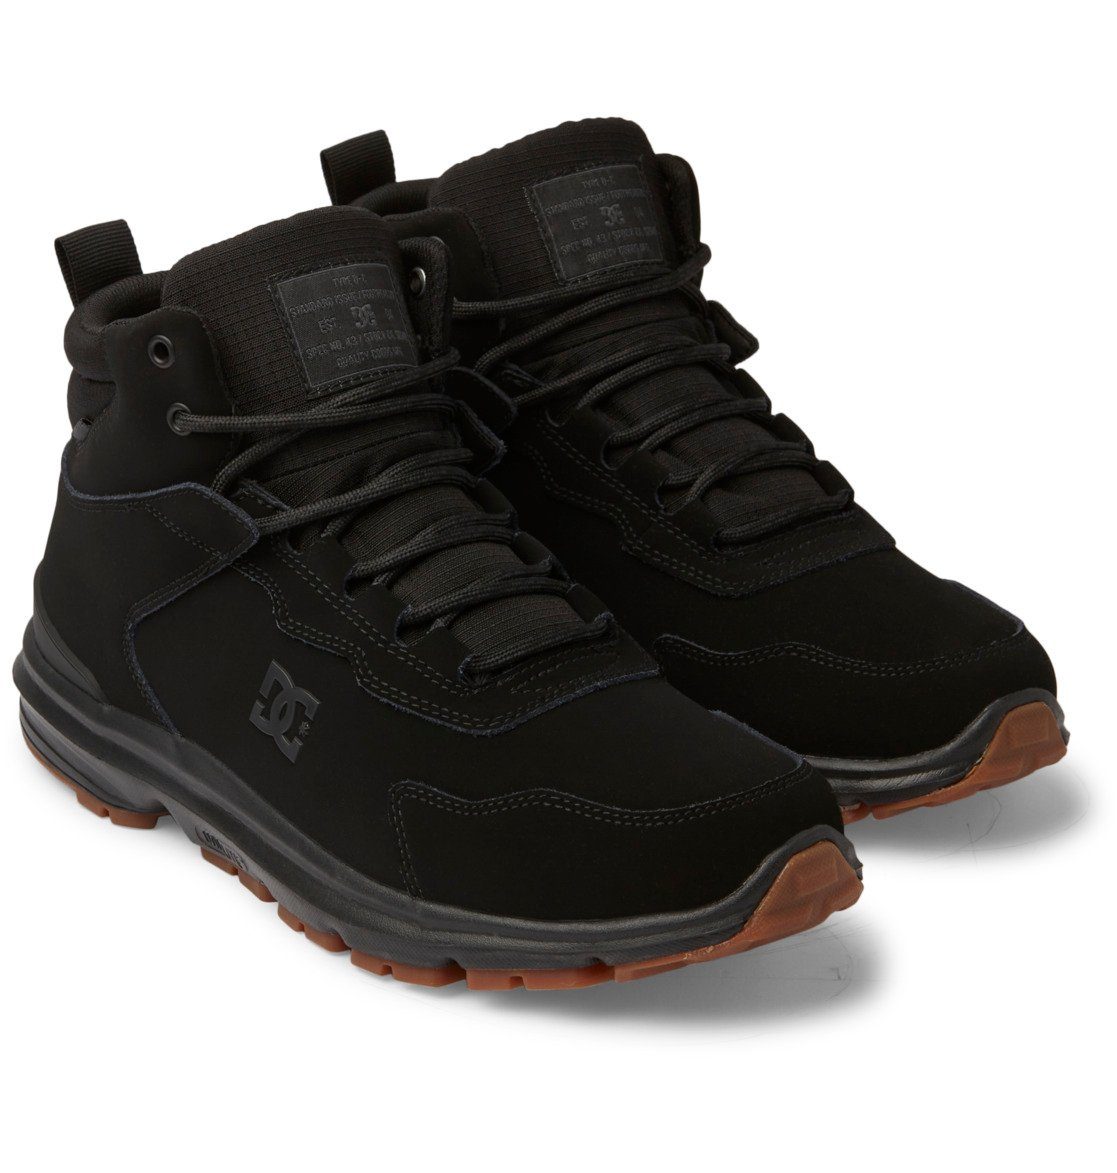 DC Shoes Mutiny Stiefel Black/Black/Black